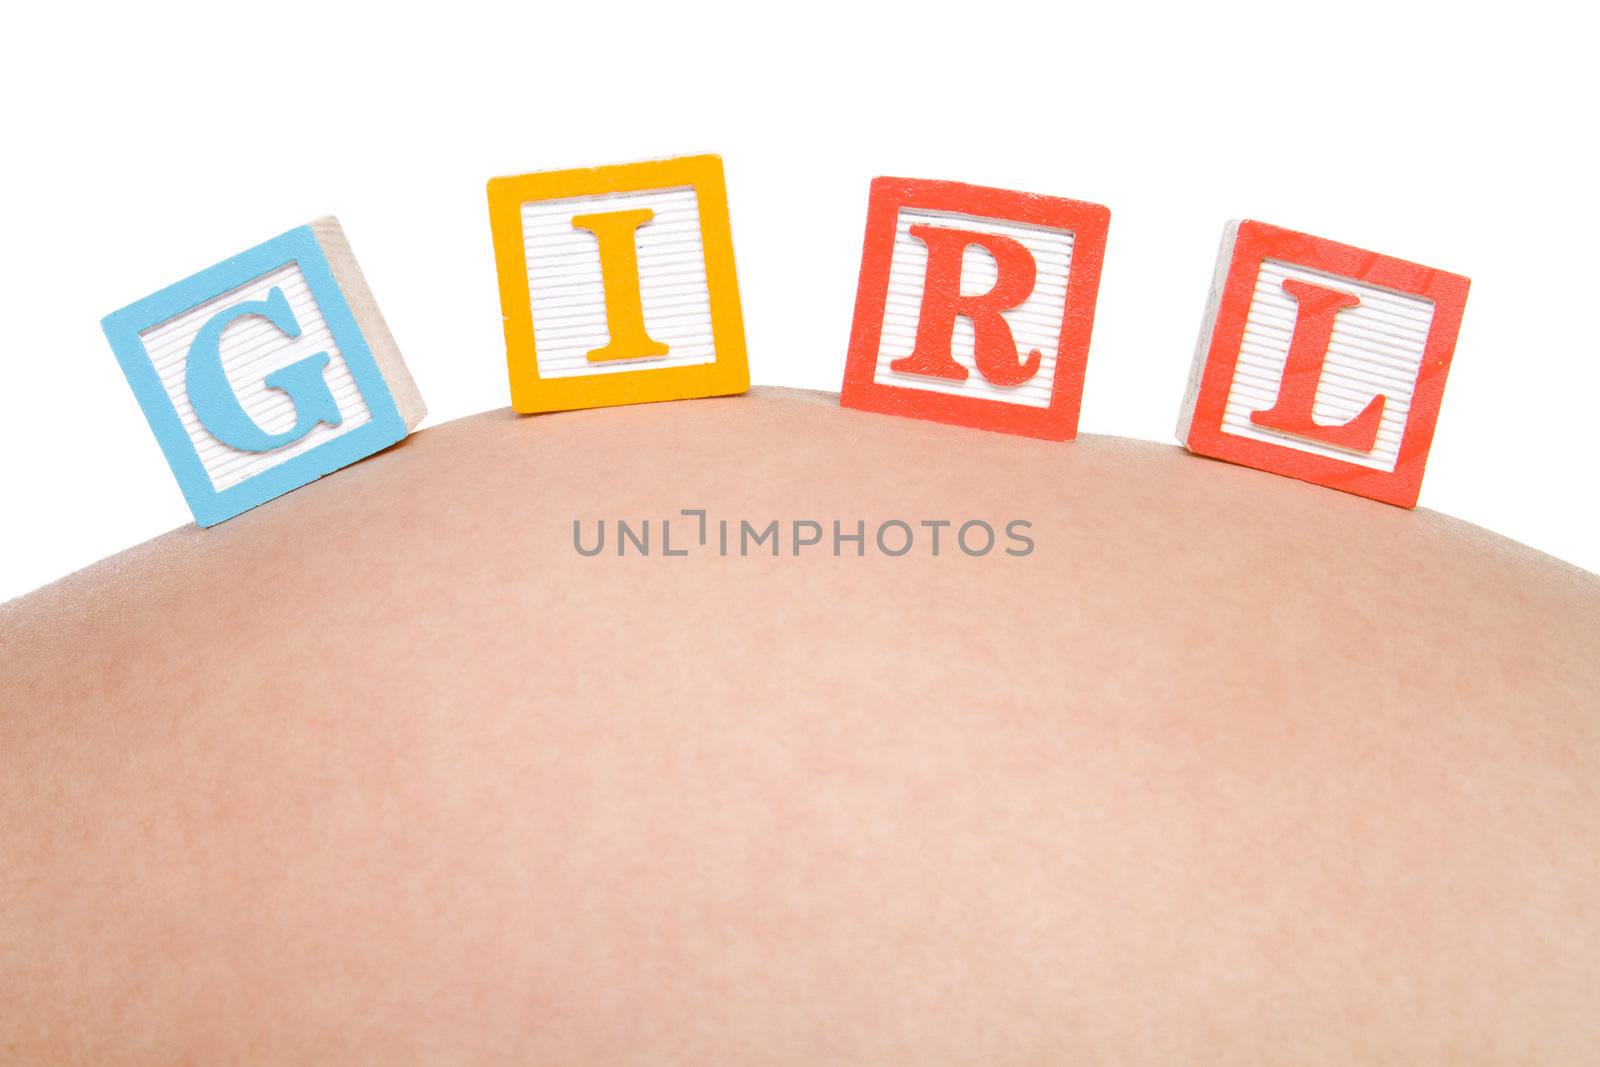 Baby blocks on pregnant stomach